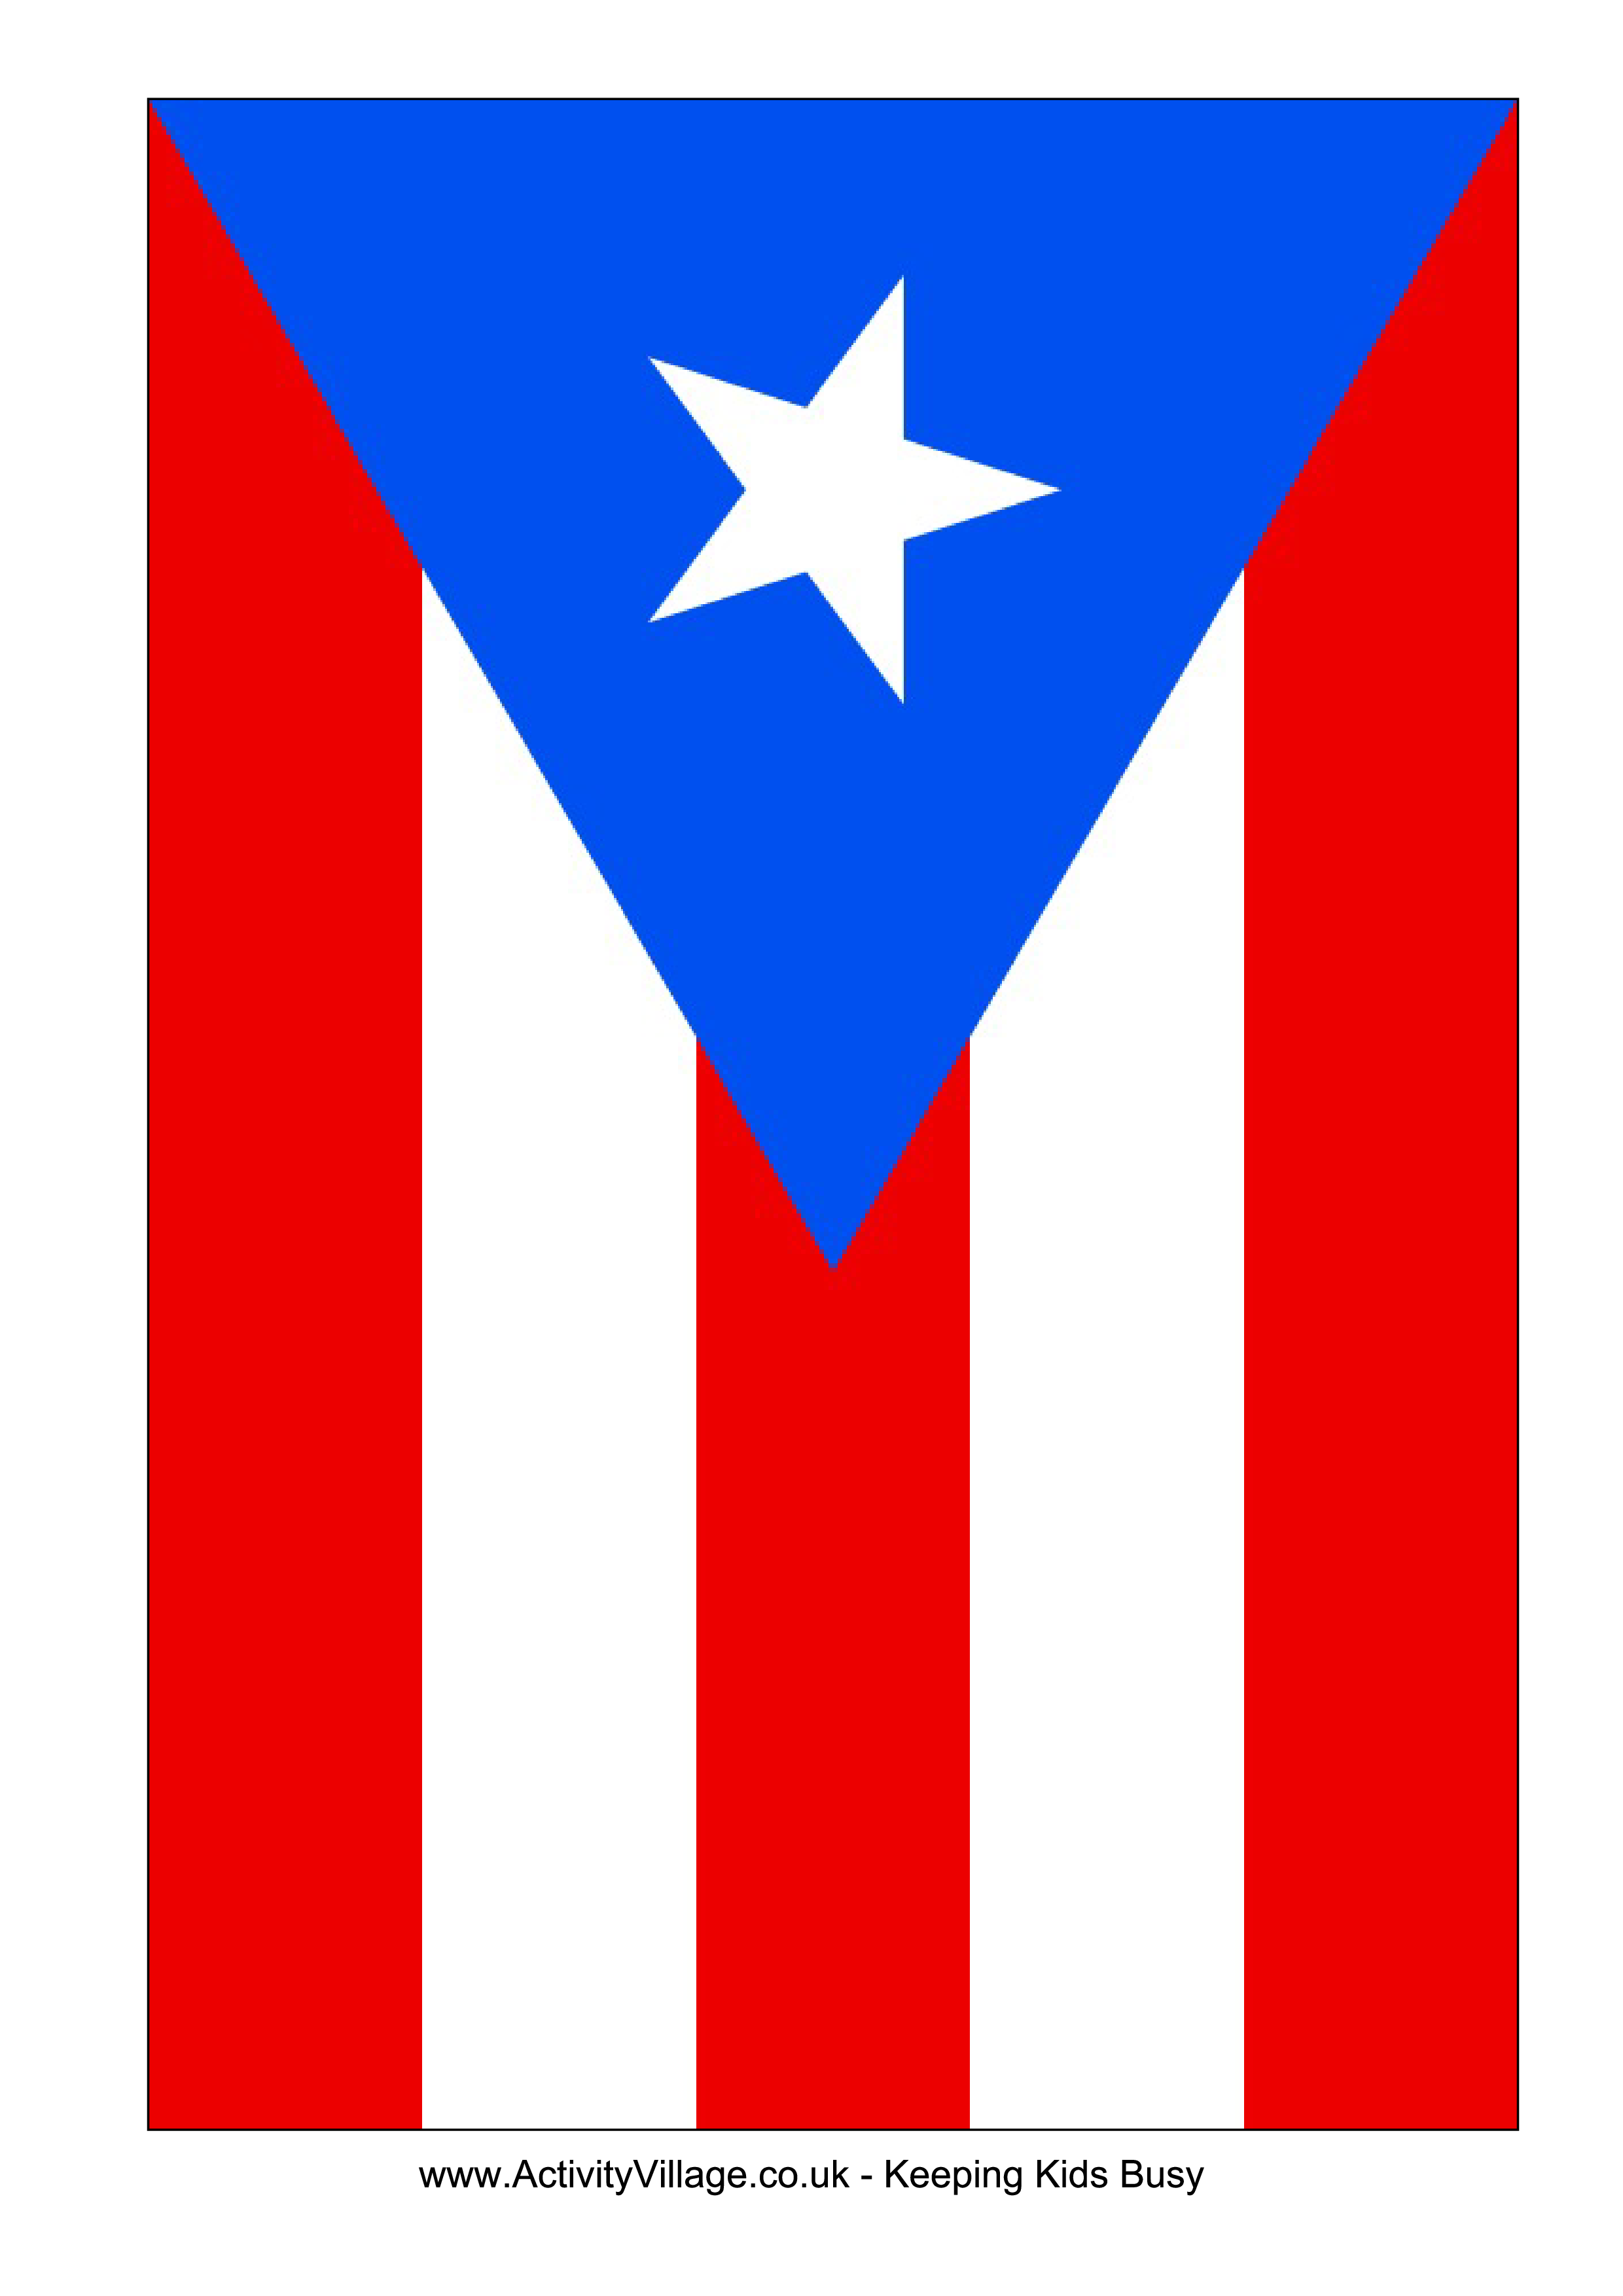 Puerto Rico Flag PNG Image HD